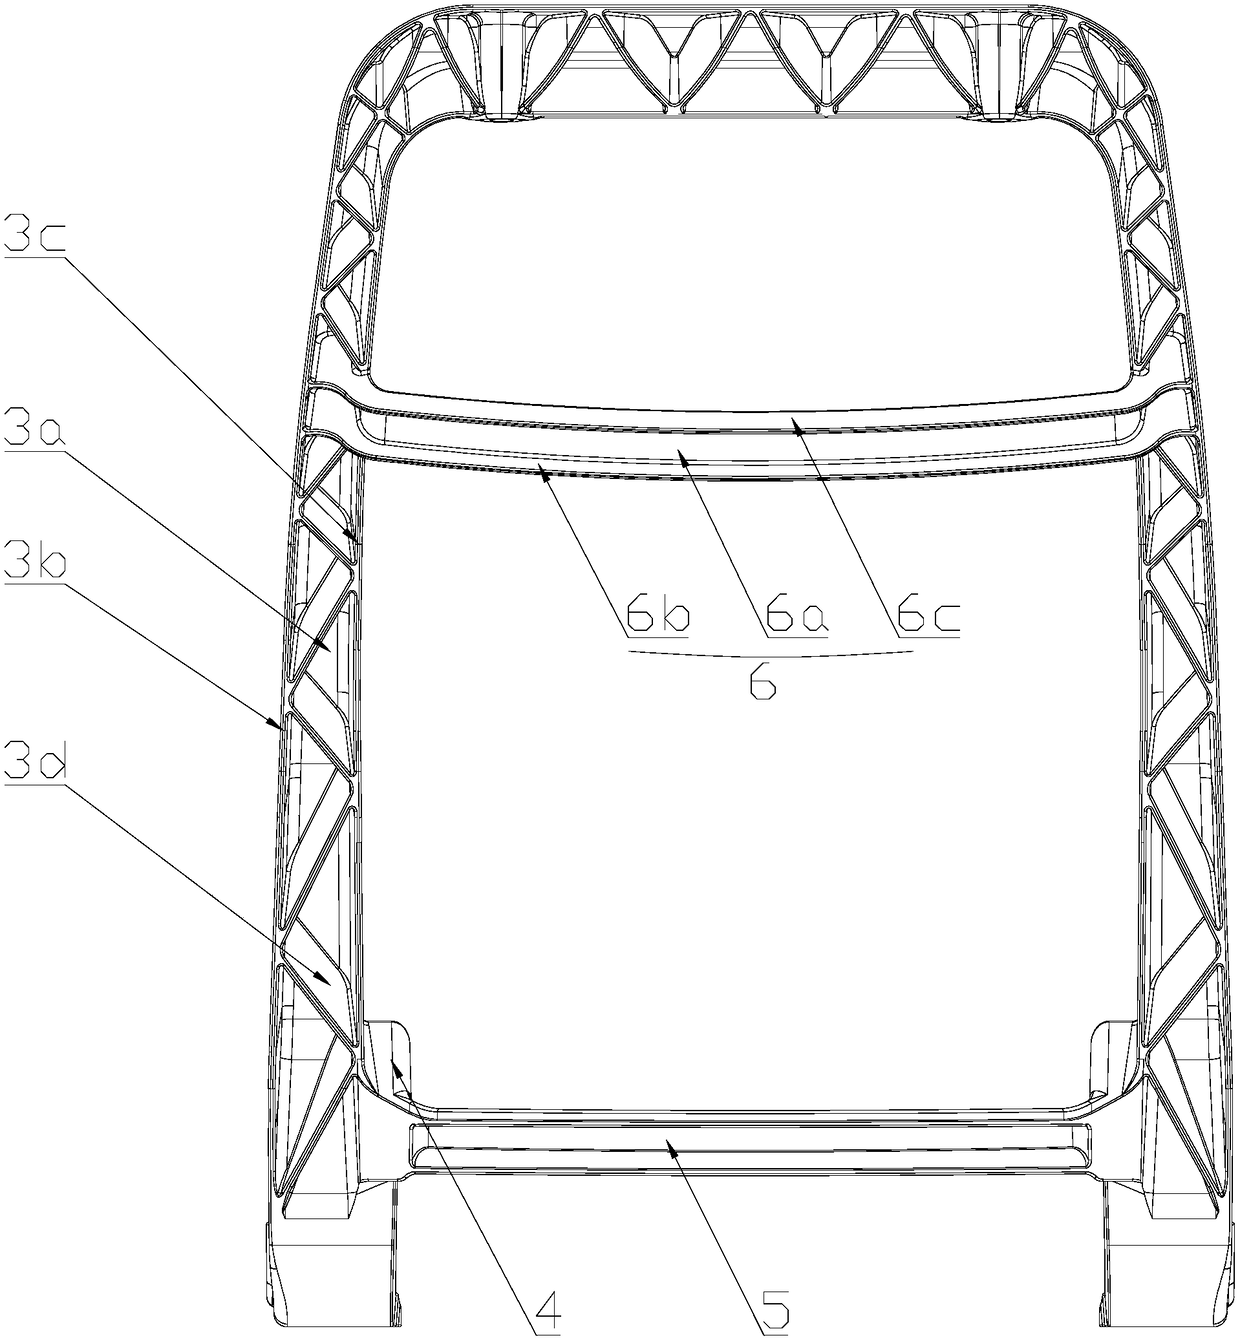 Automobile seat skeleton structure